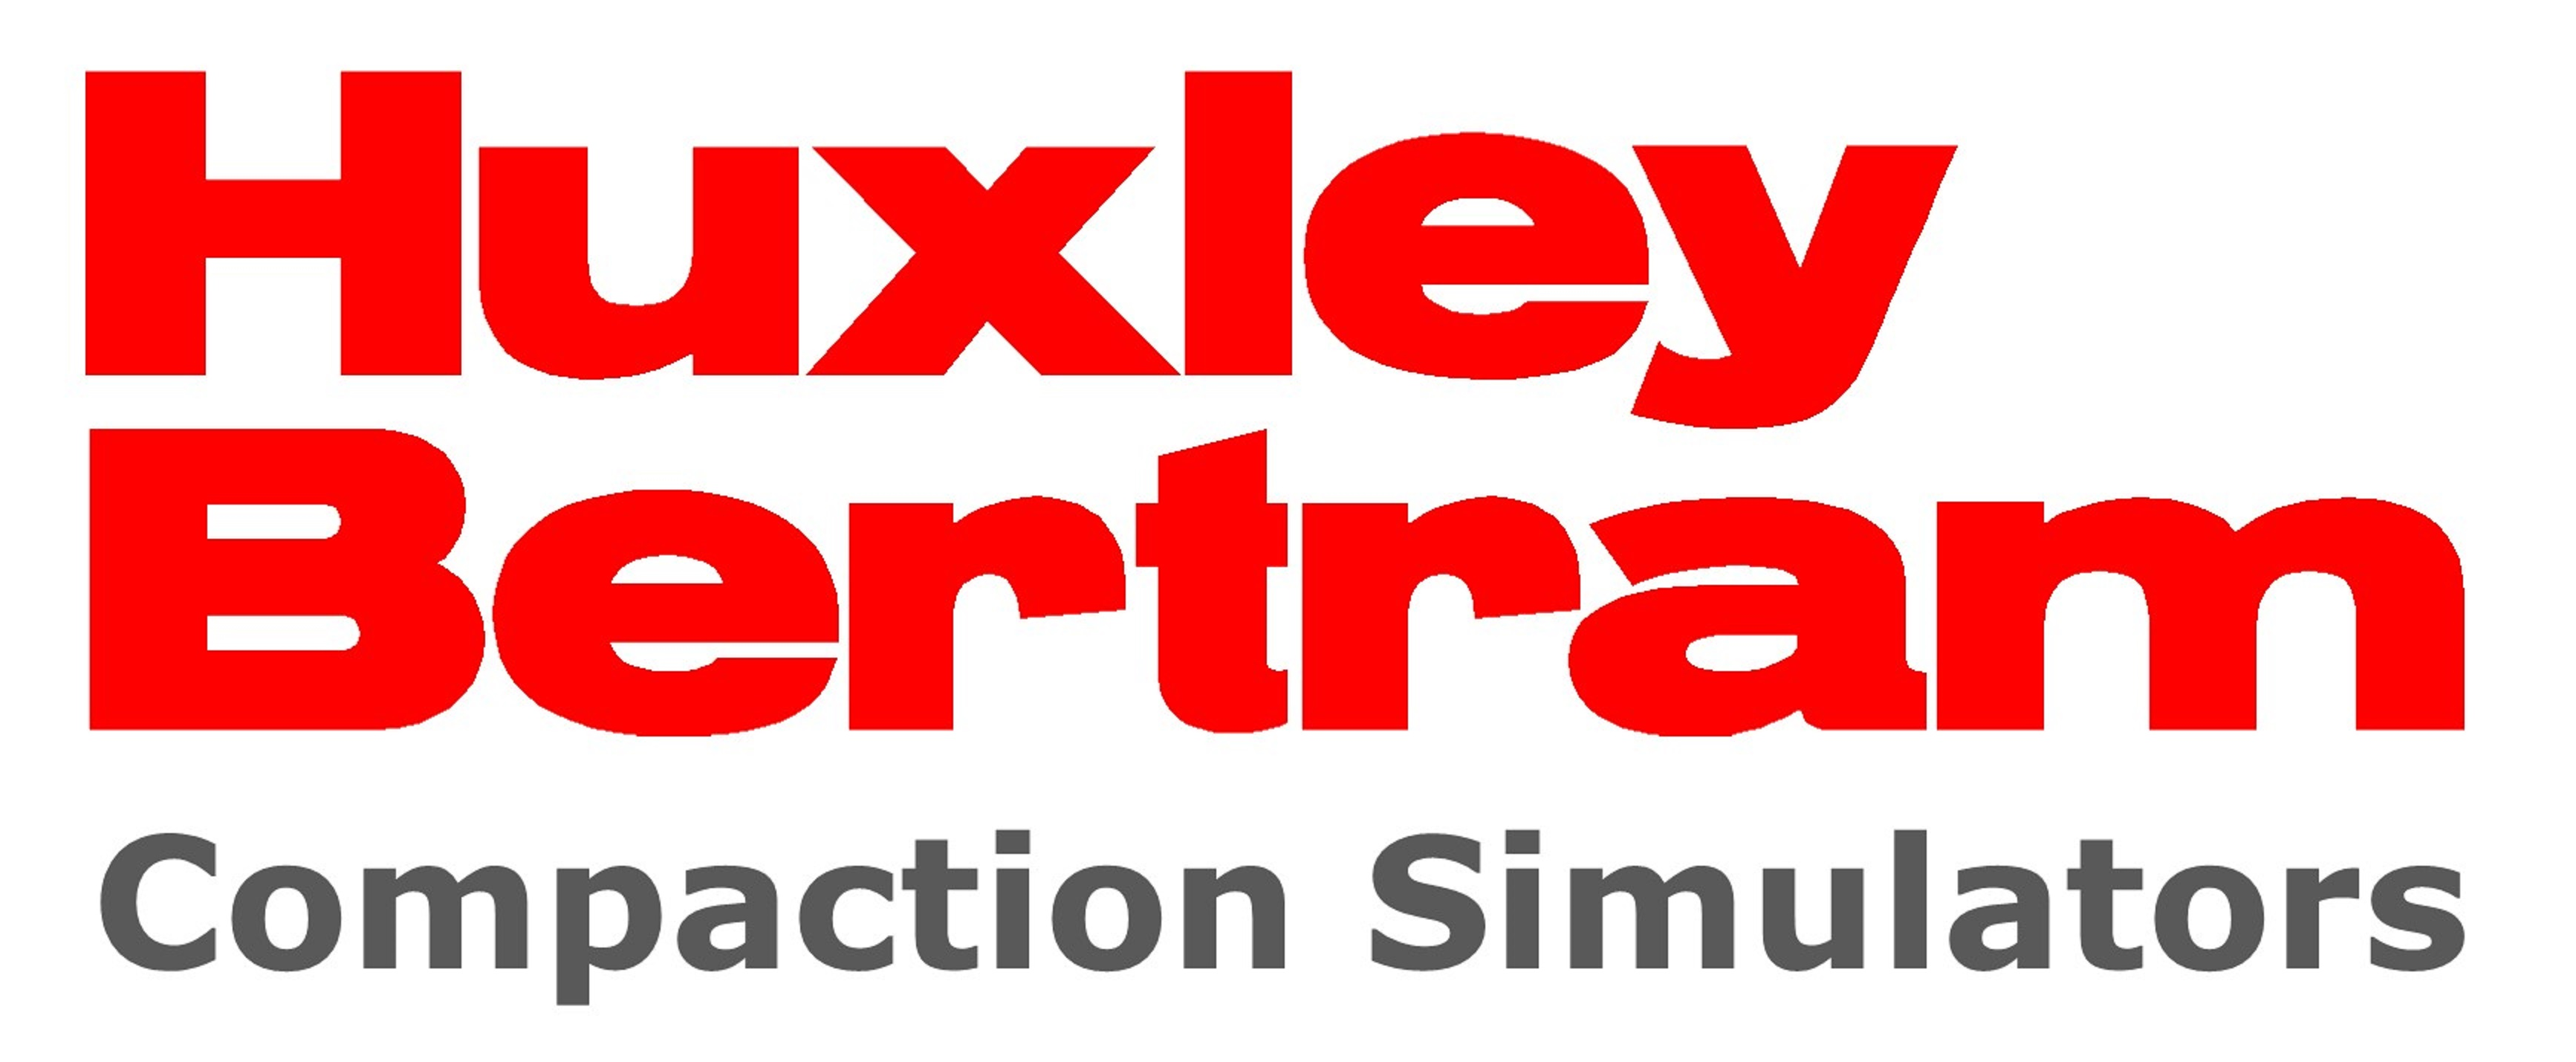 Huxley Bertram Compaction Test Features